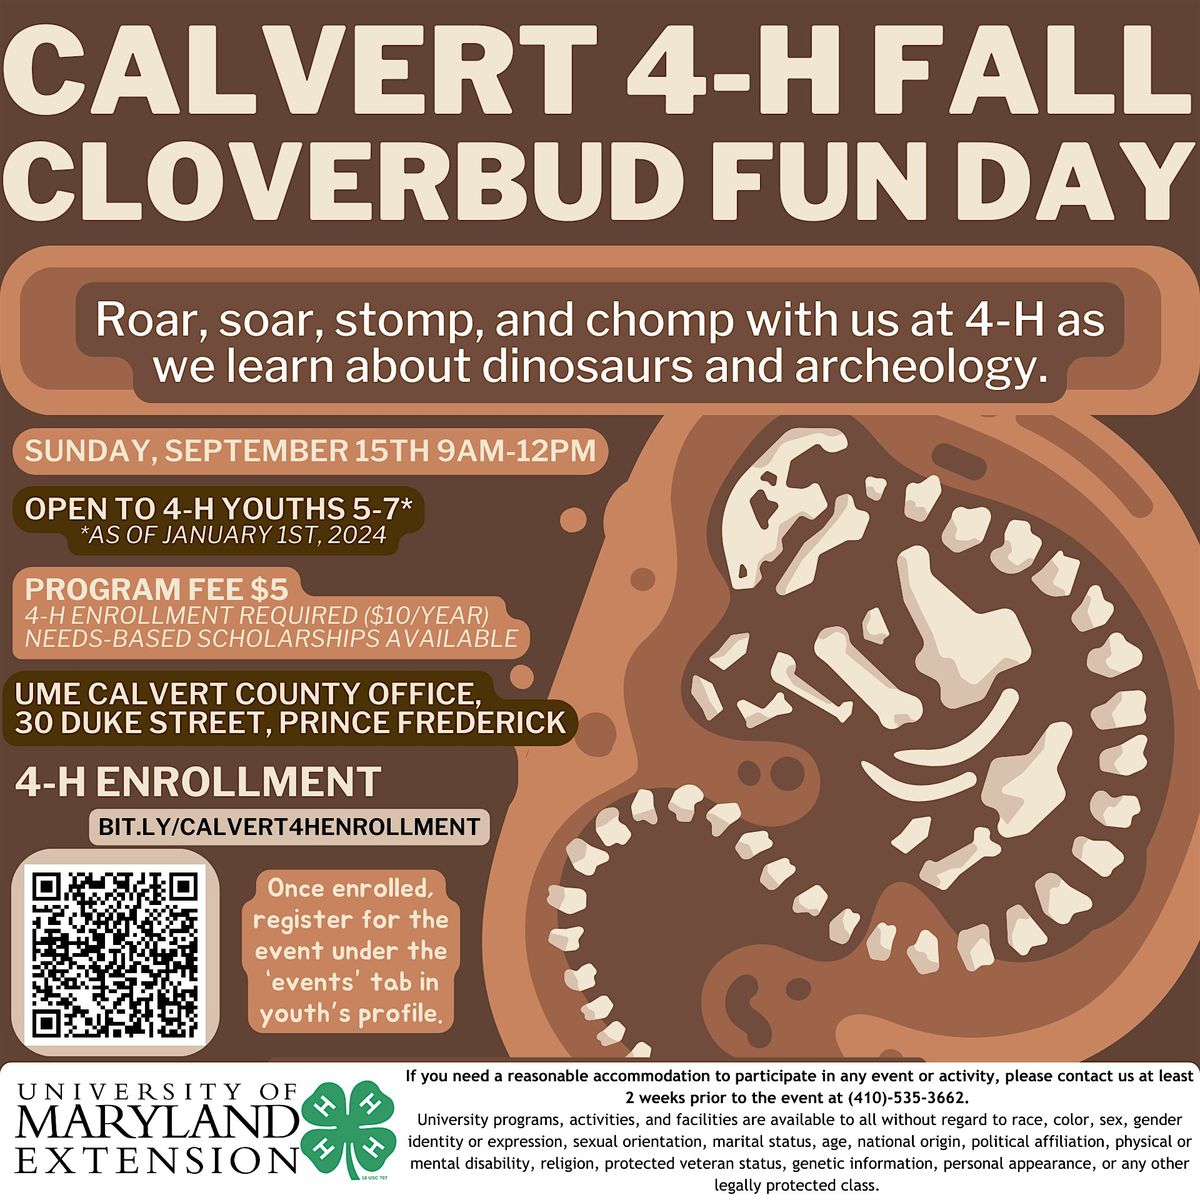 Calvert 4-H Fall Cloverbud Fun Day!